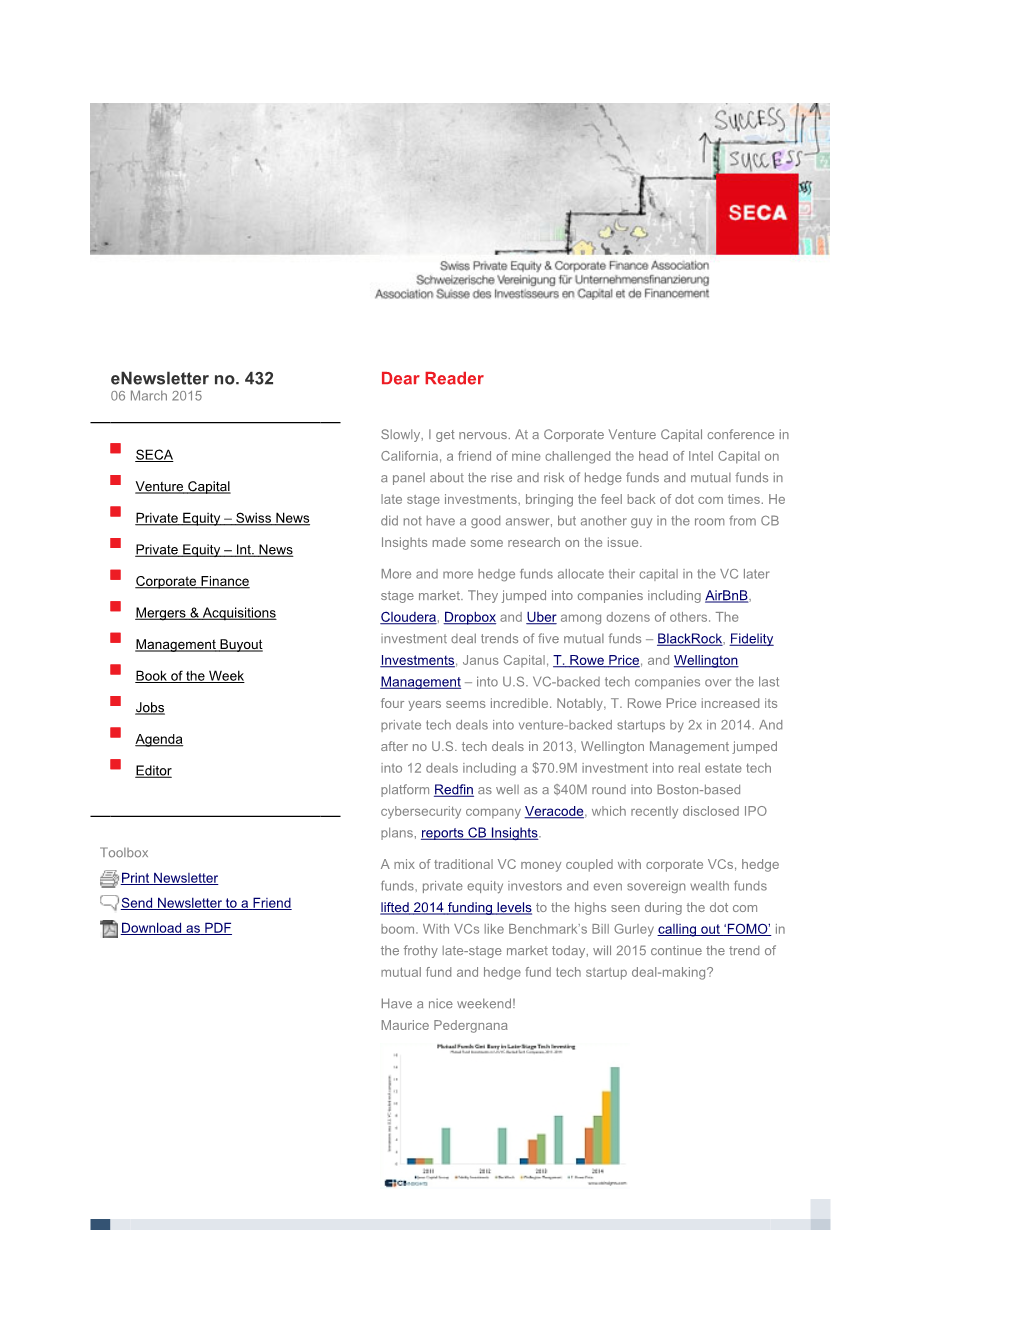 SECA | Swiss Private Equity & Corporate Finance Association